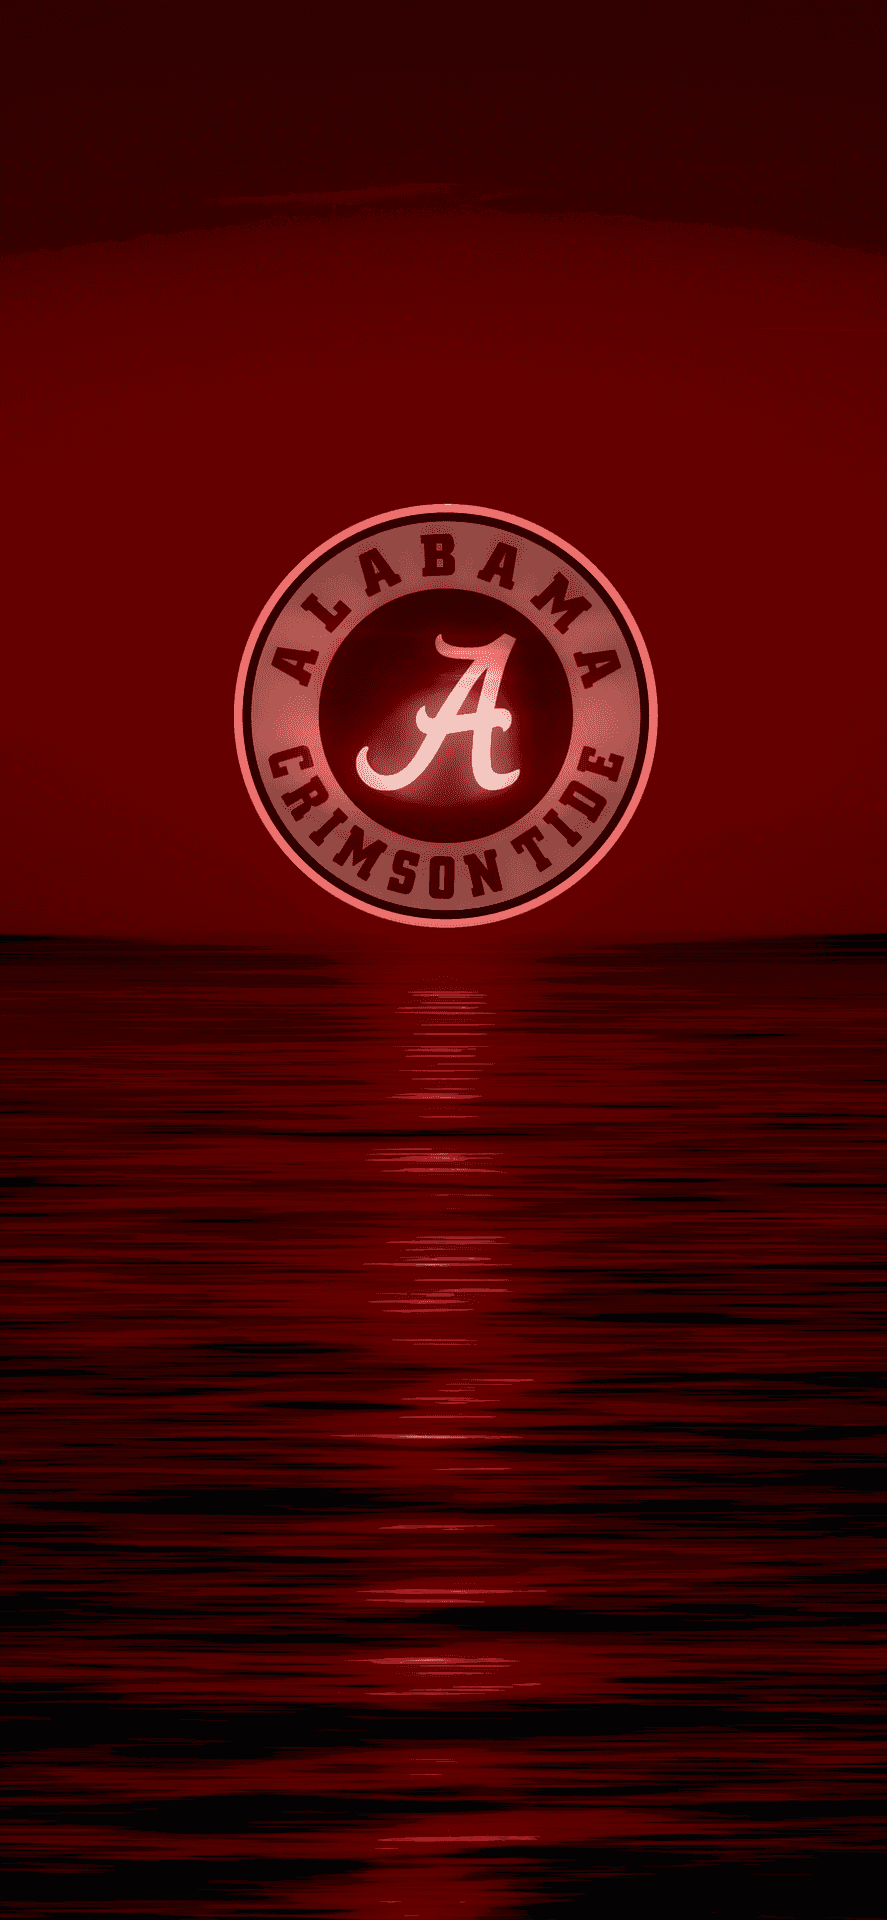 Roll Tide! Show your Alabama Crimson Tide Pride